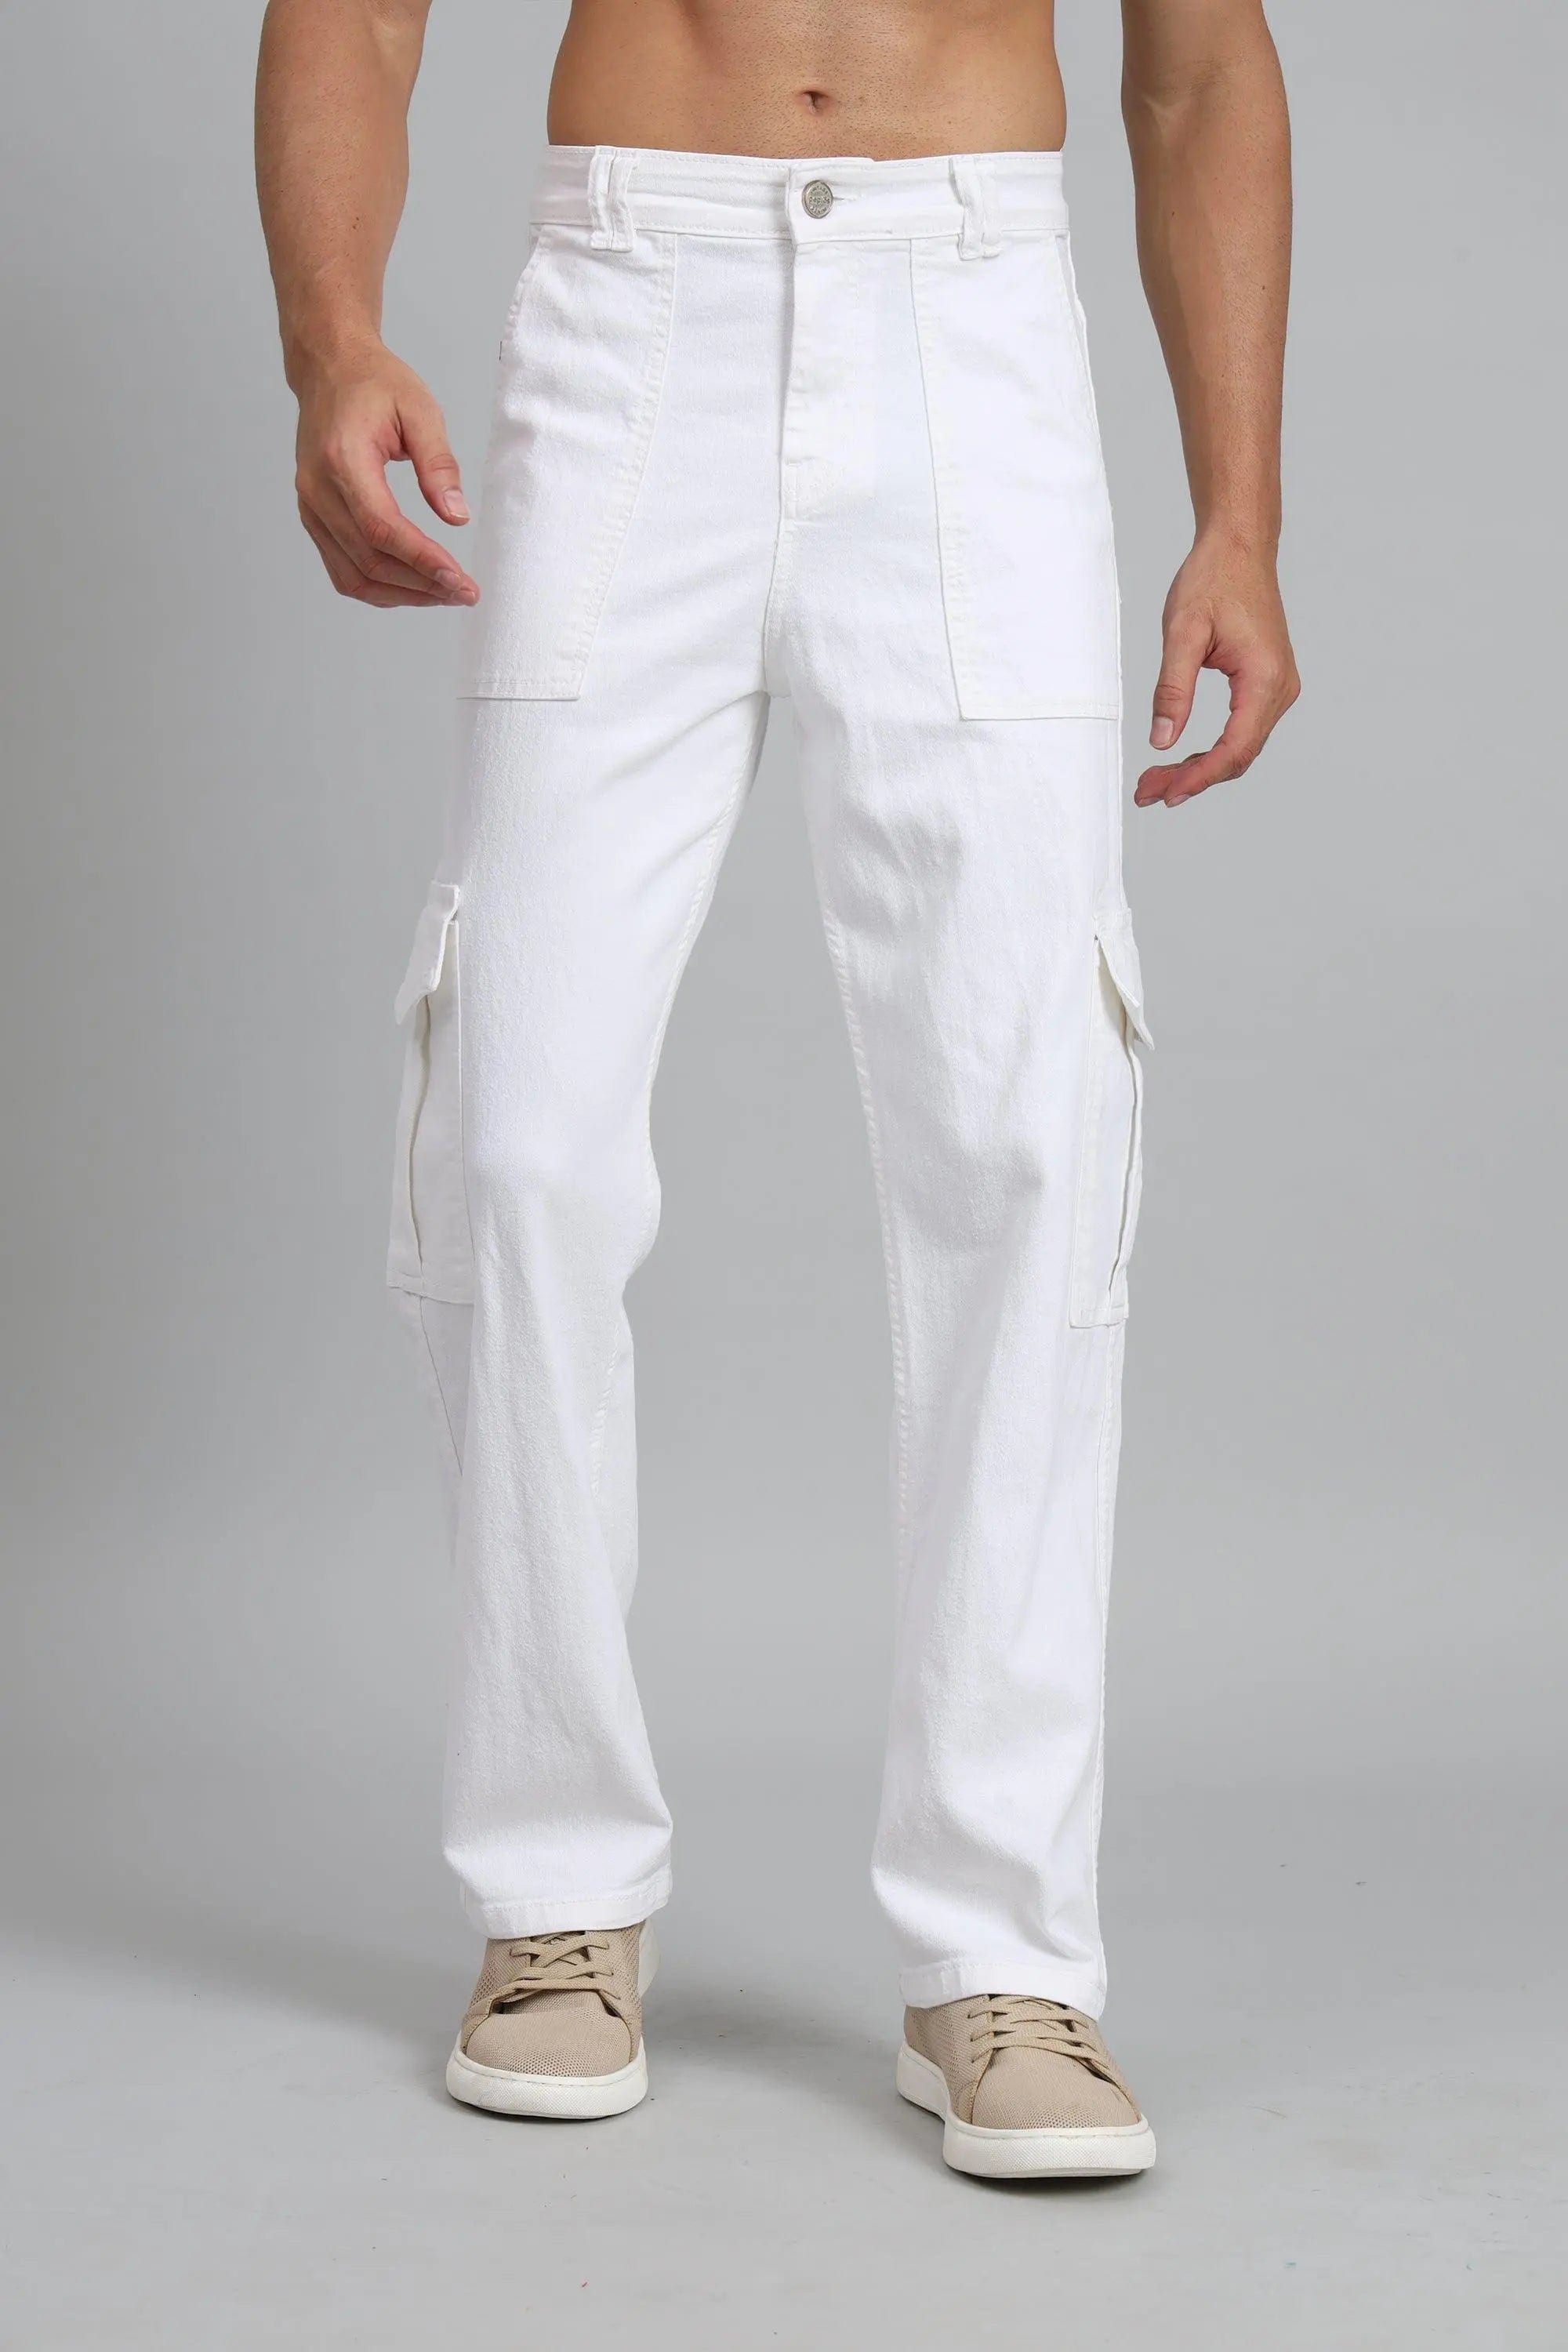 Men Trousers Cargo Pants Pocket Drawstring Elastic Waist Straight Loose Fit  Chic | eBay